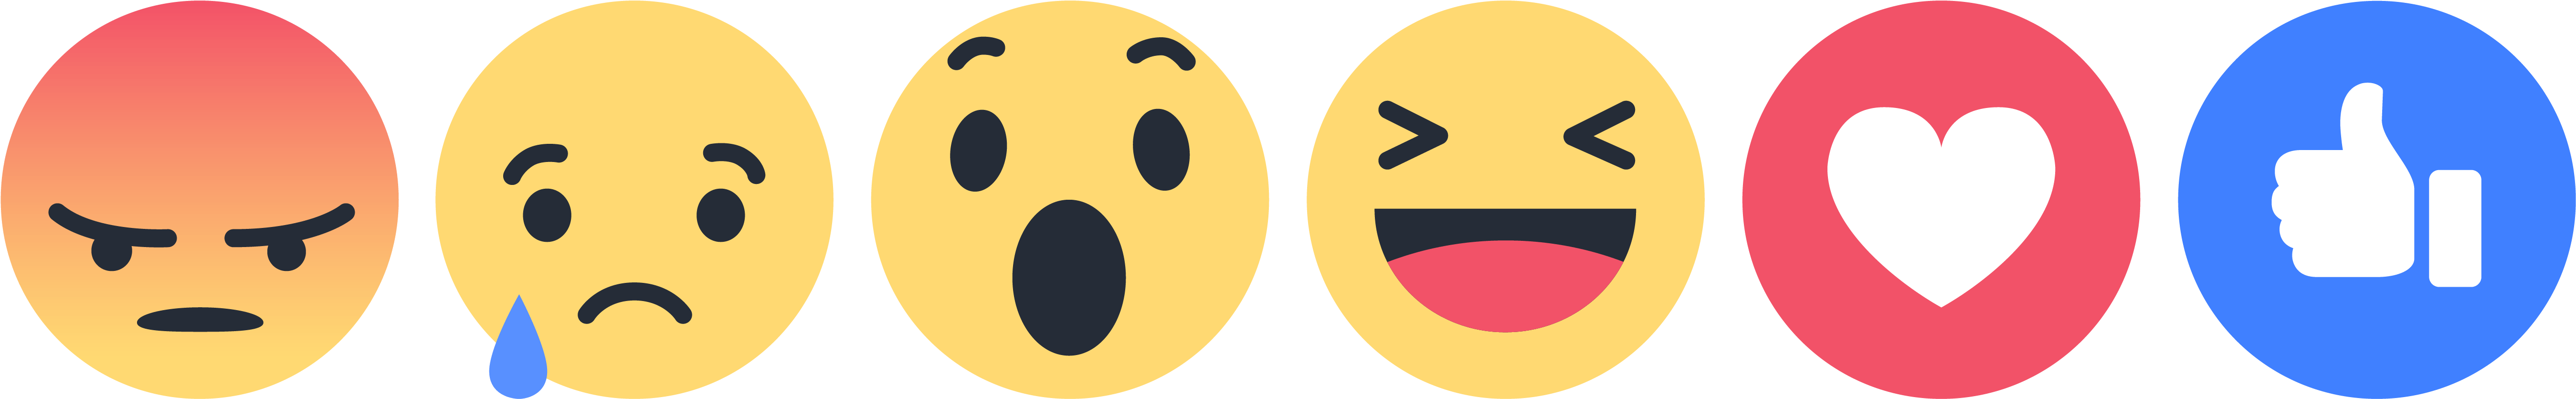 Facebook Reactions Emojis Lineup PNG